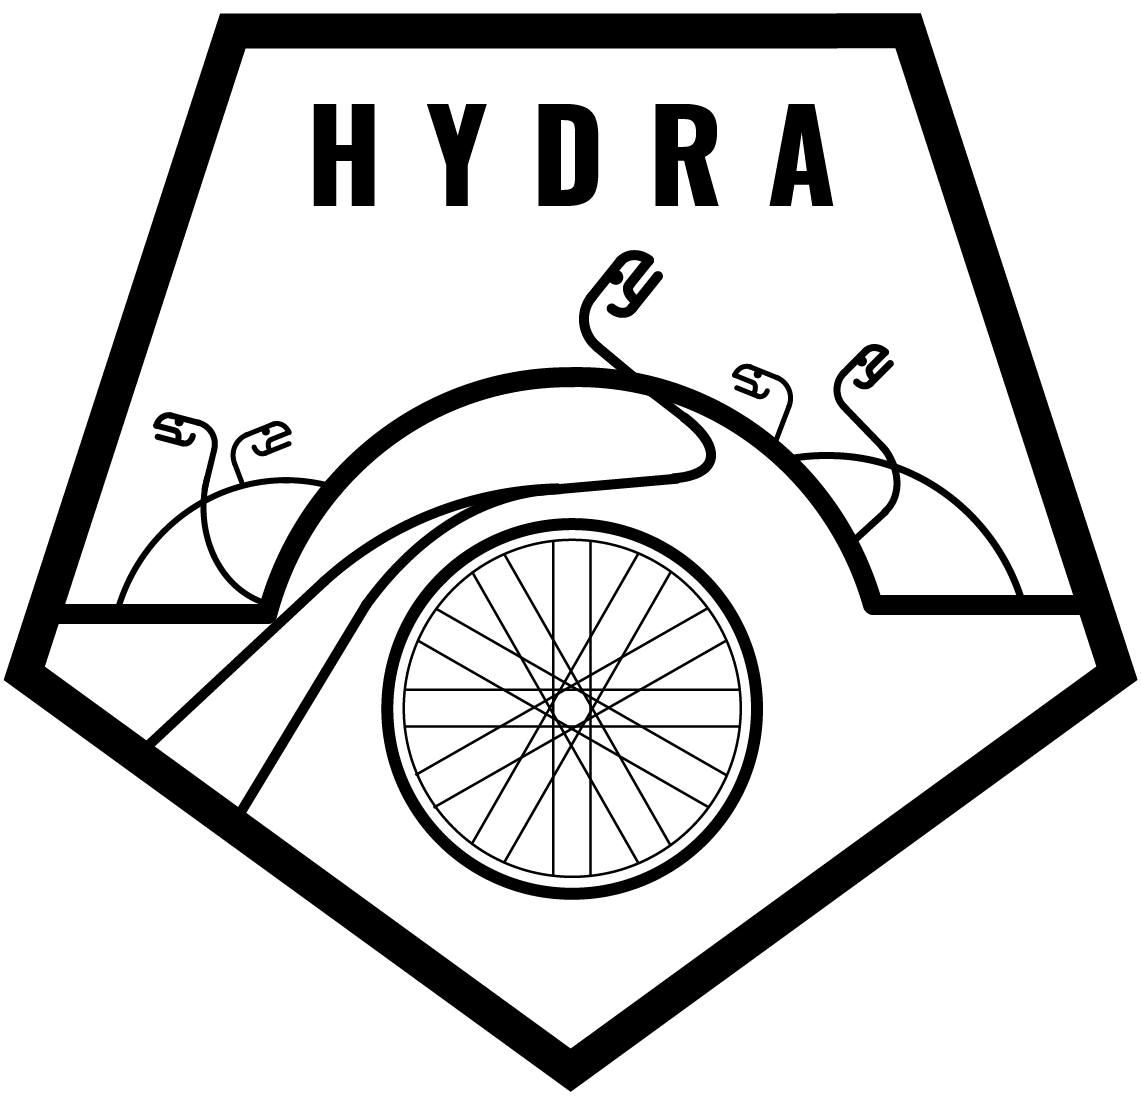 Captain America Hydra logo PNG image Fond